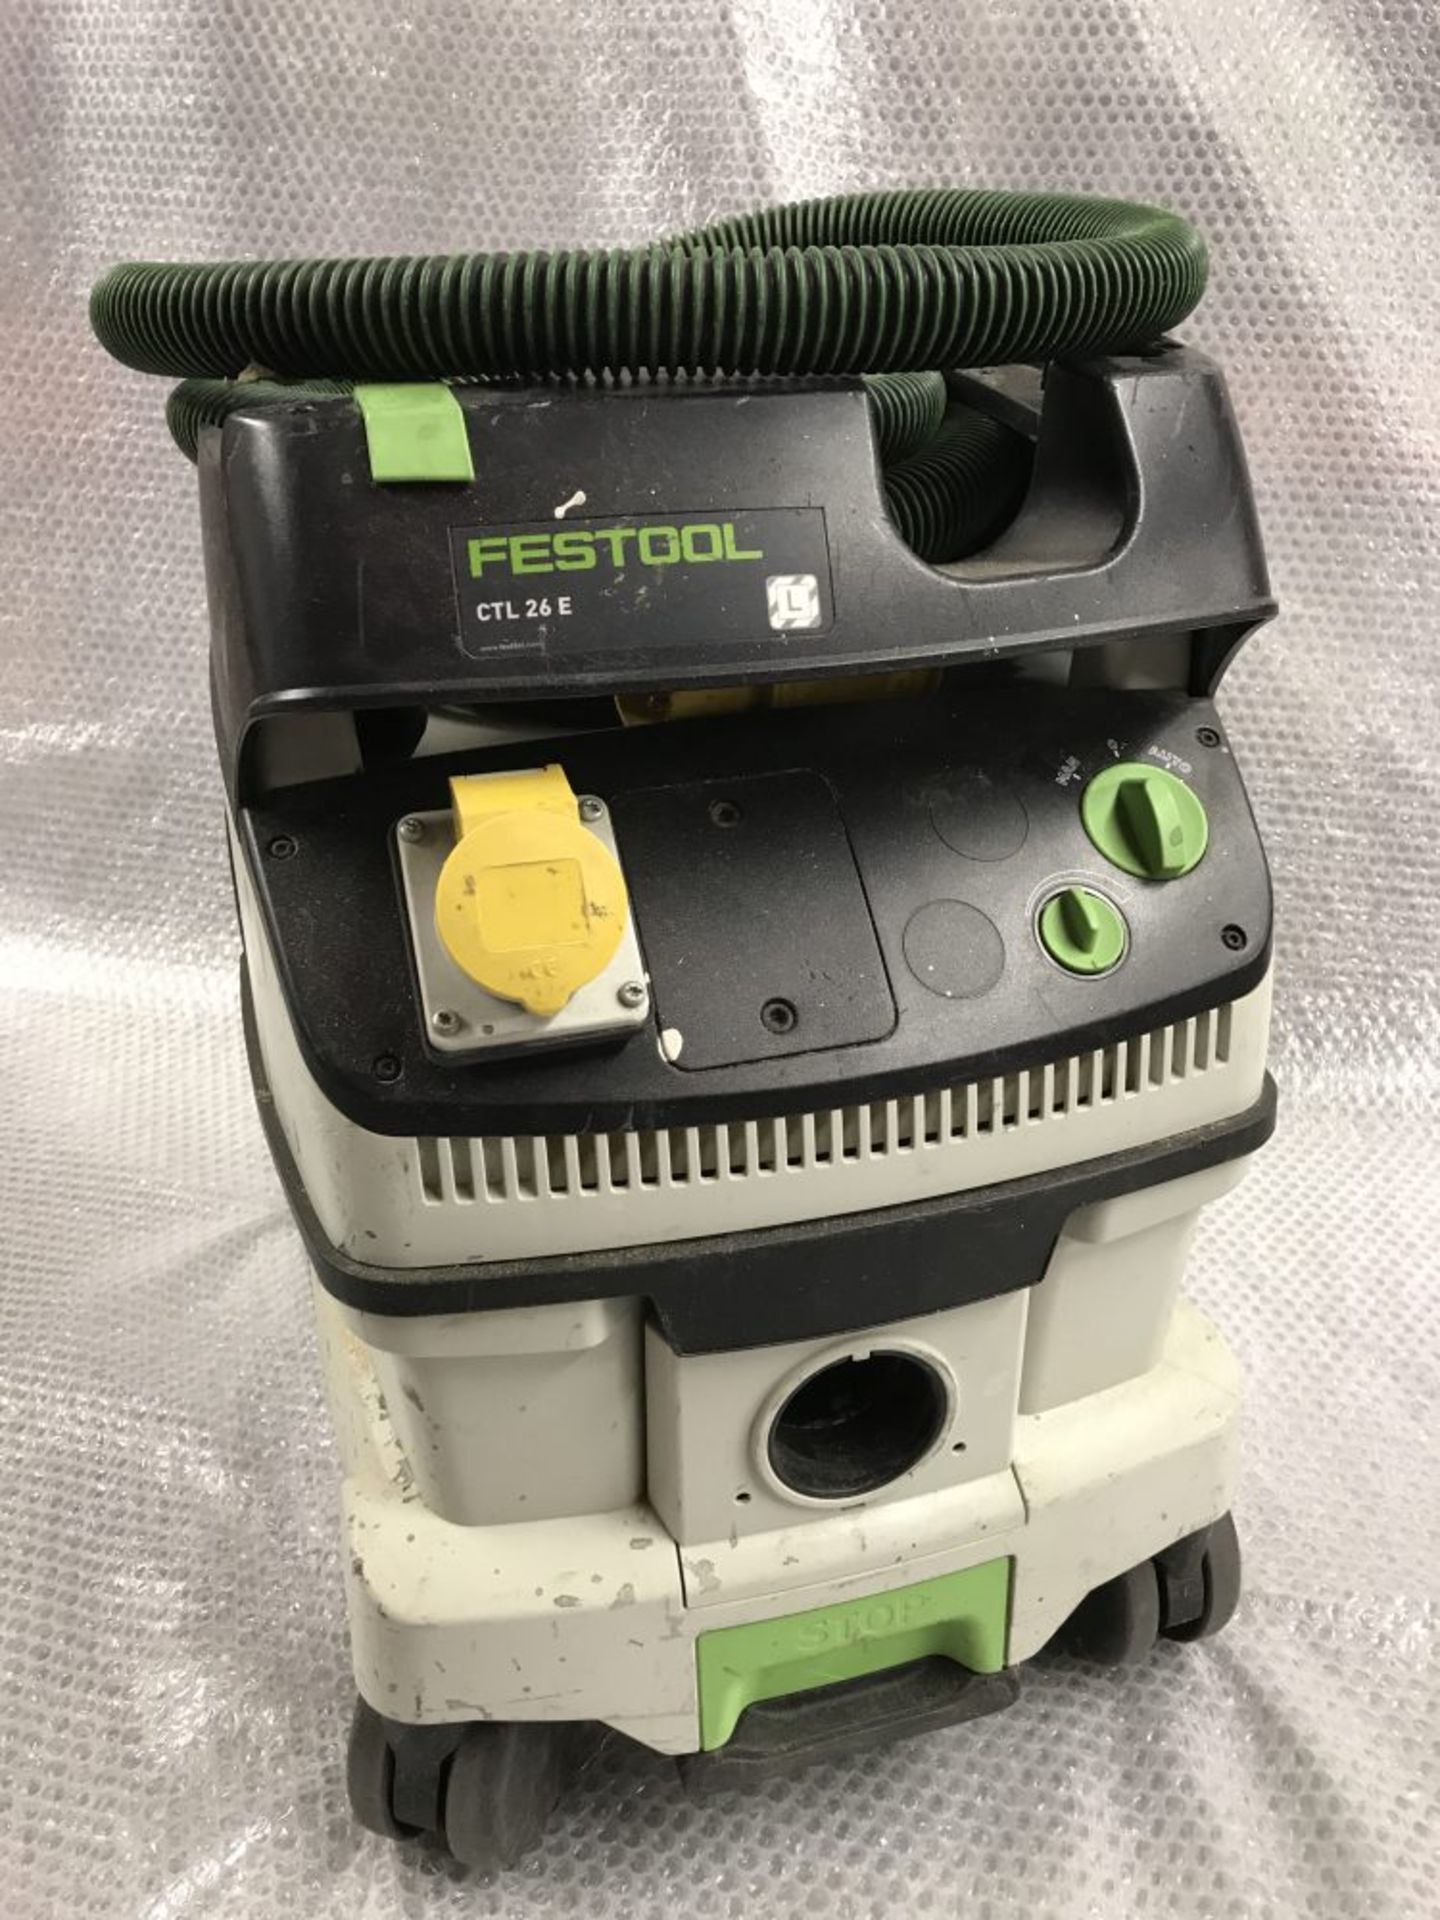 Festool CT 26 E extractor, 110V - Image 2 of 5